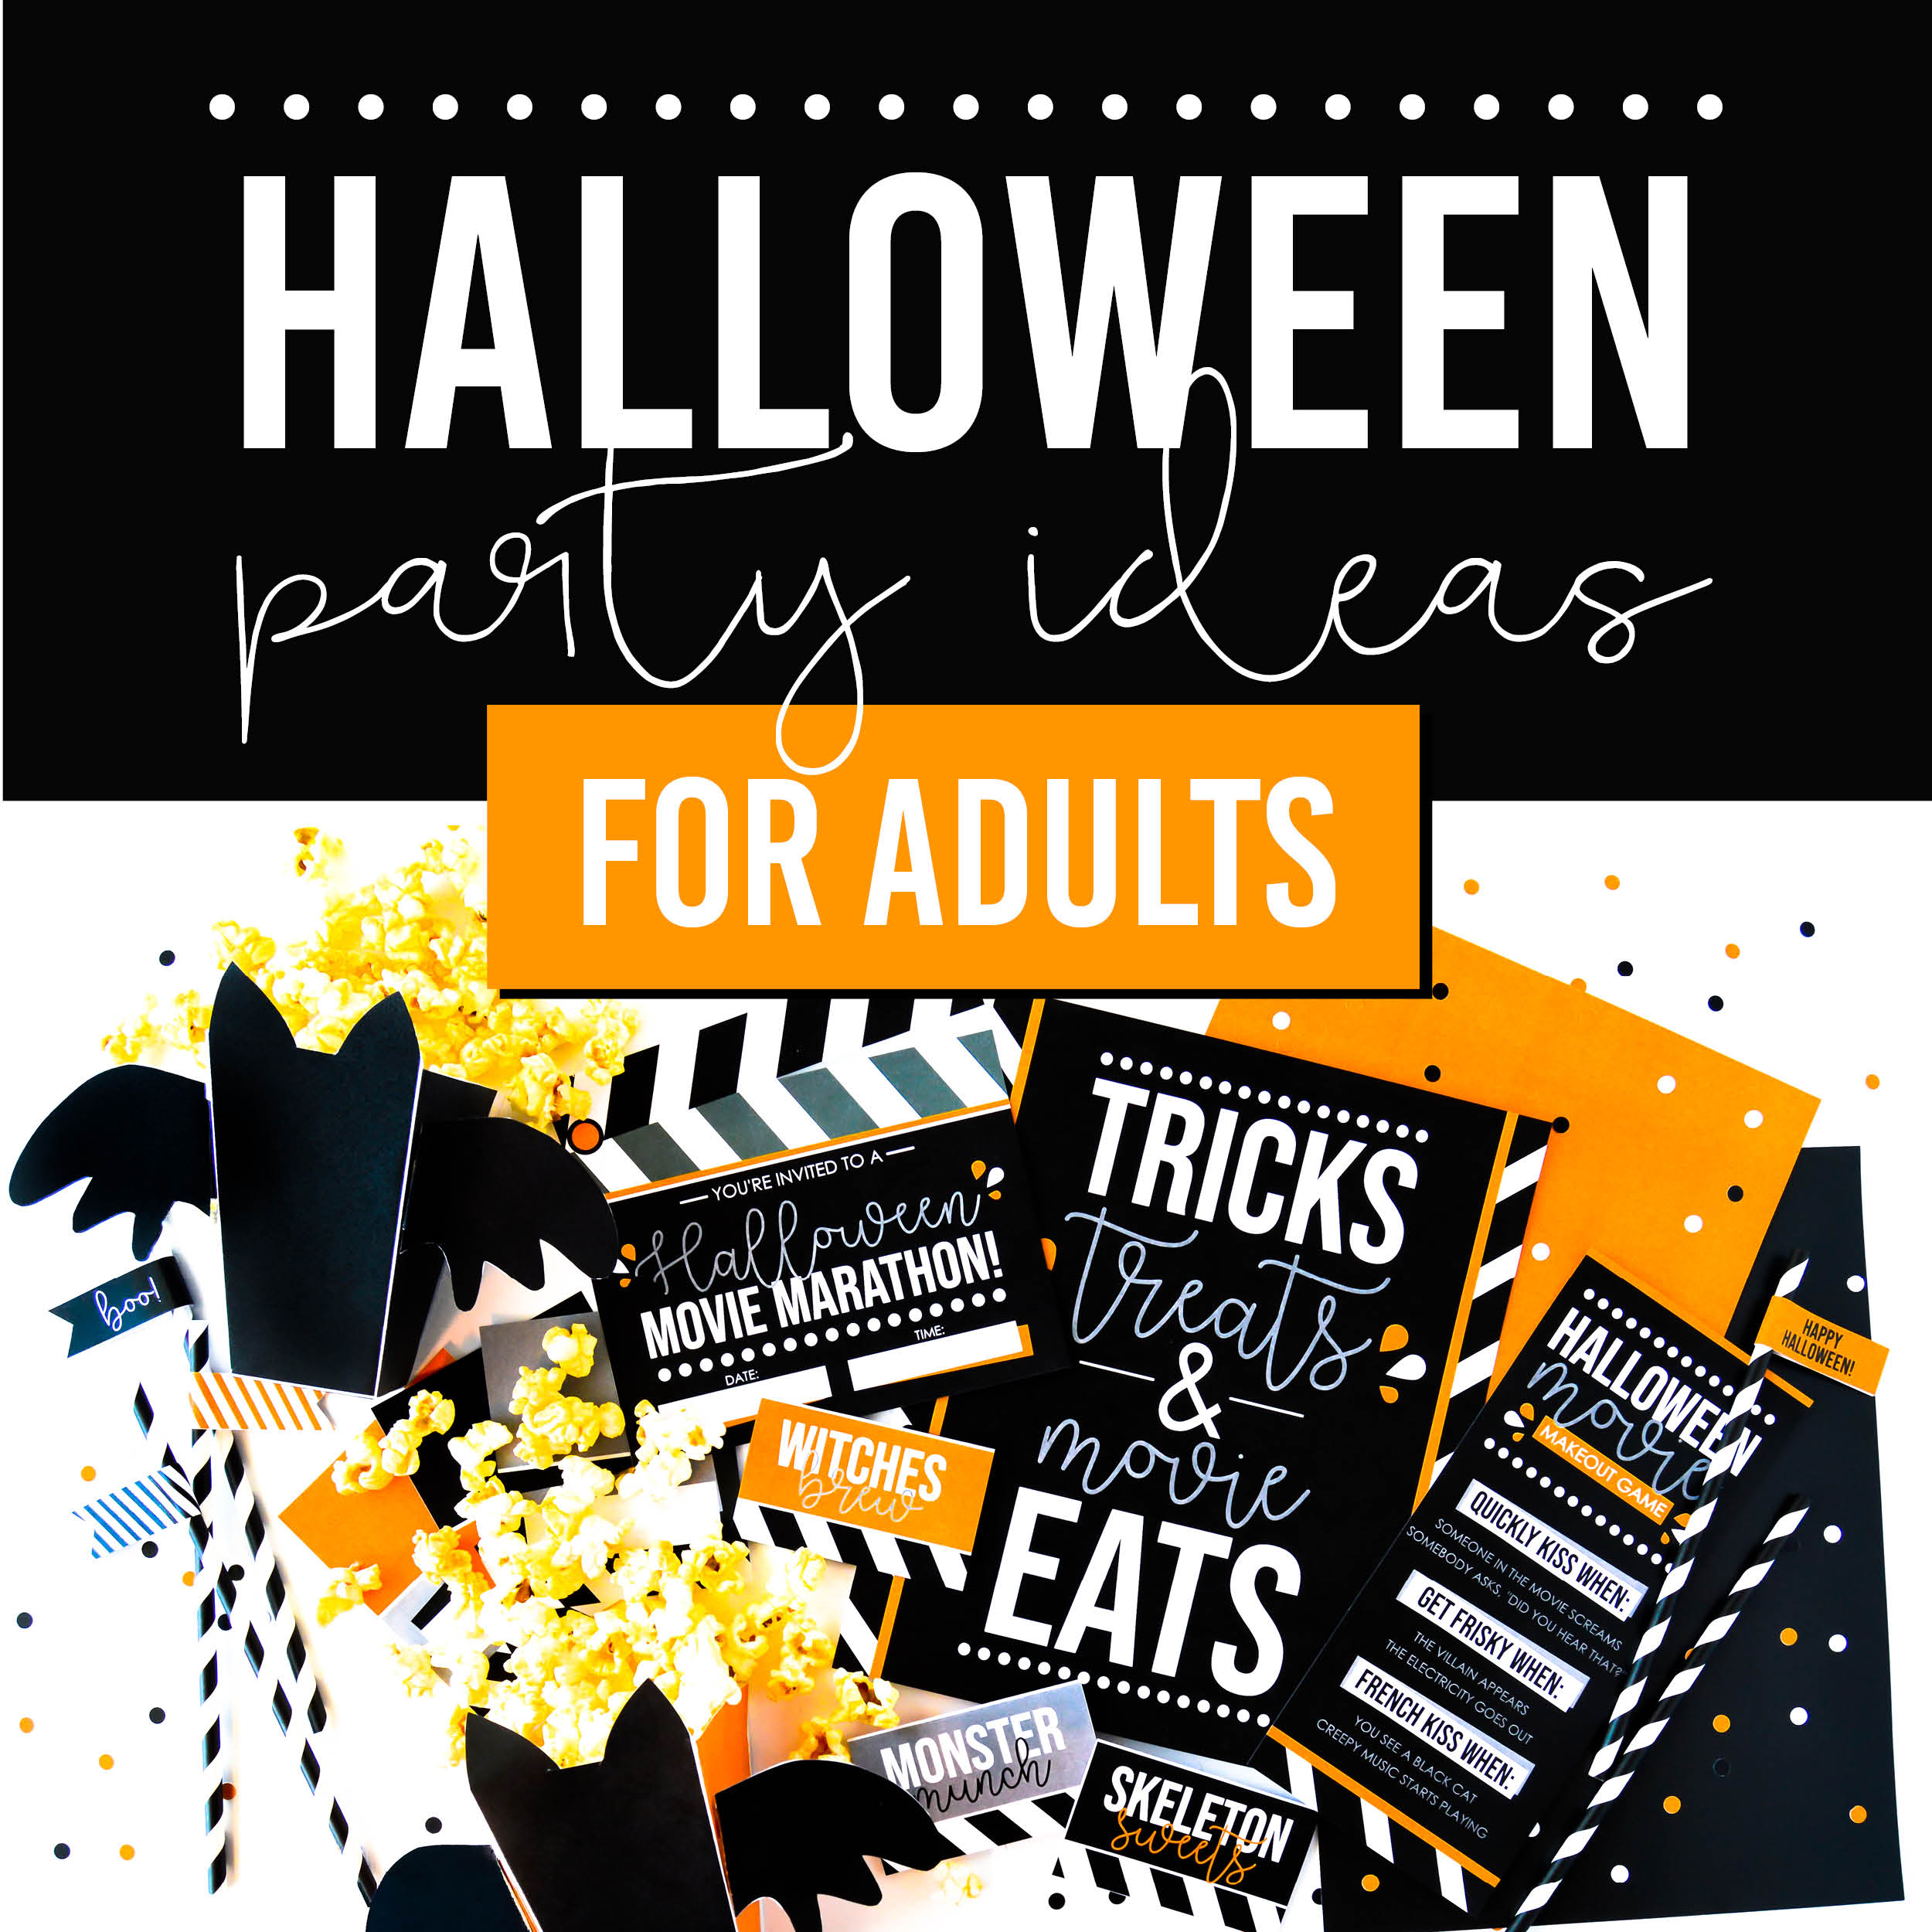 8 Hocus Pocus Halloween Party Bingo Game Printable Cards